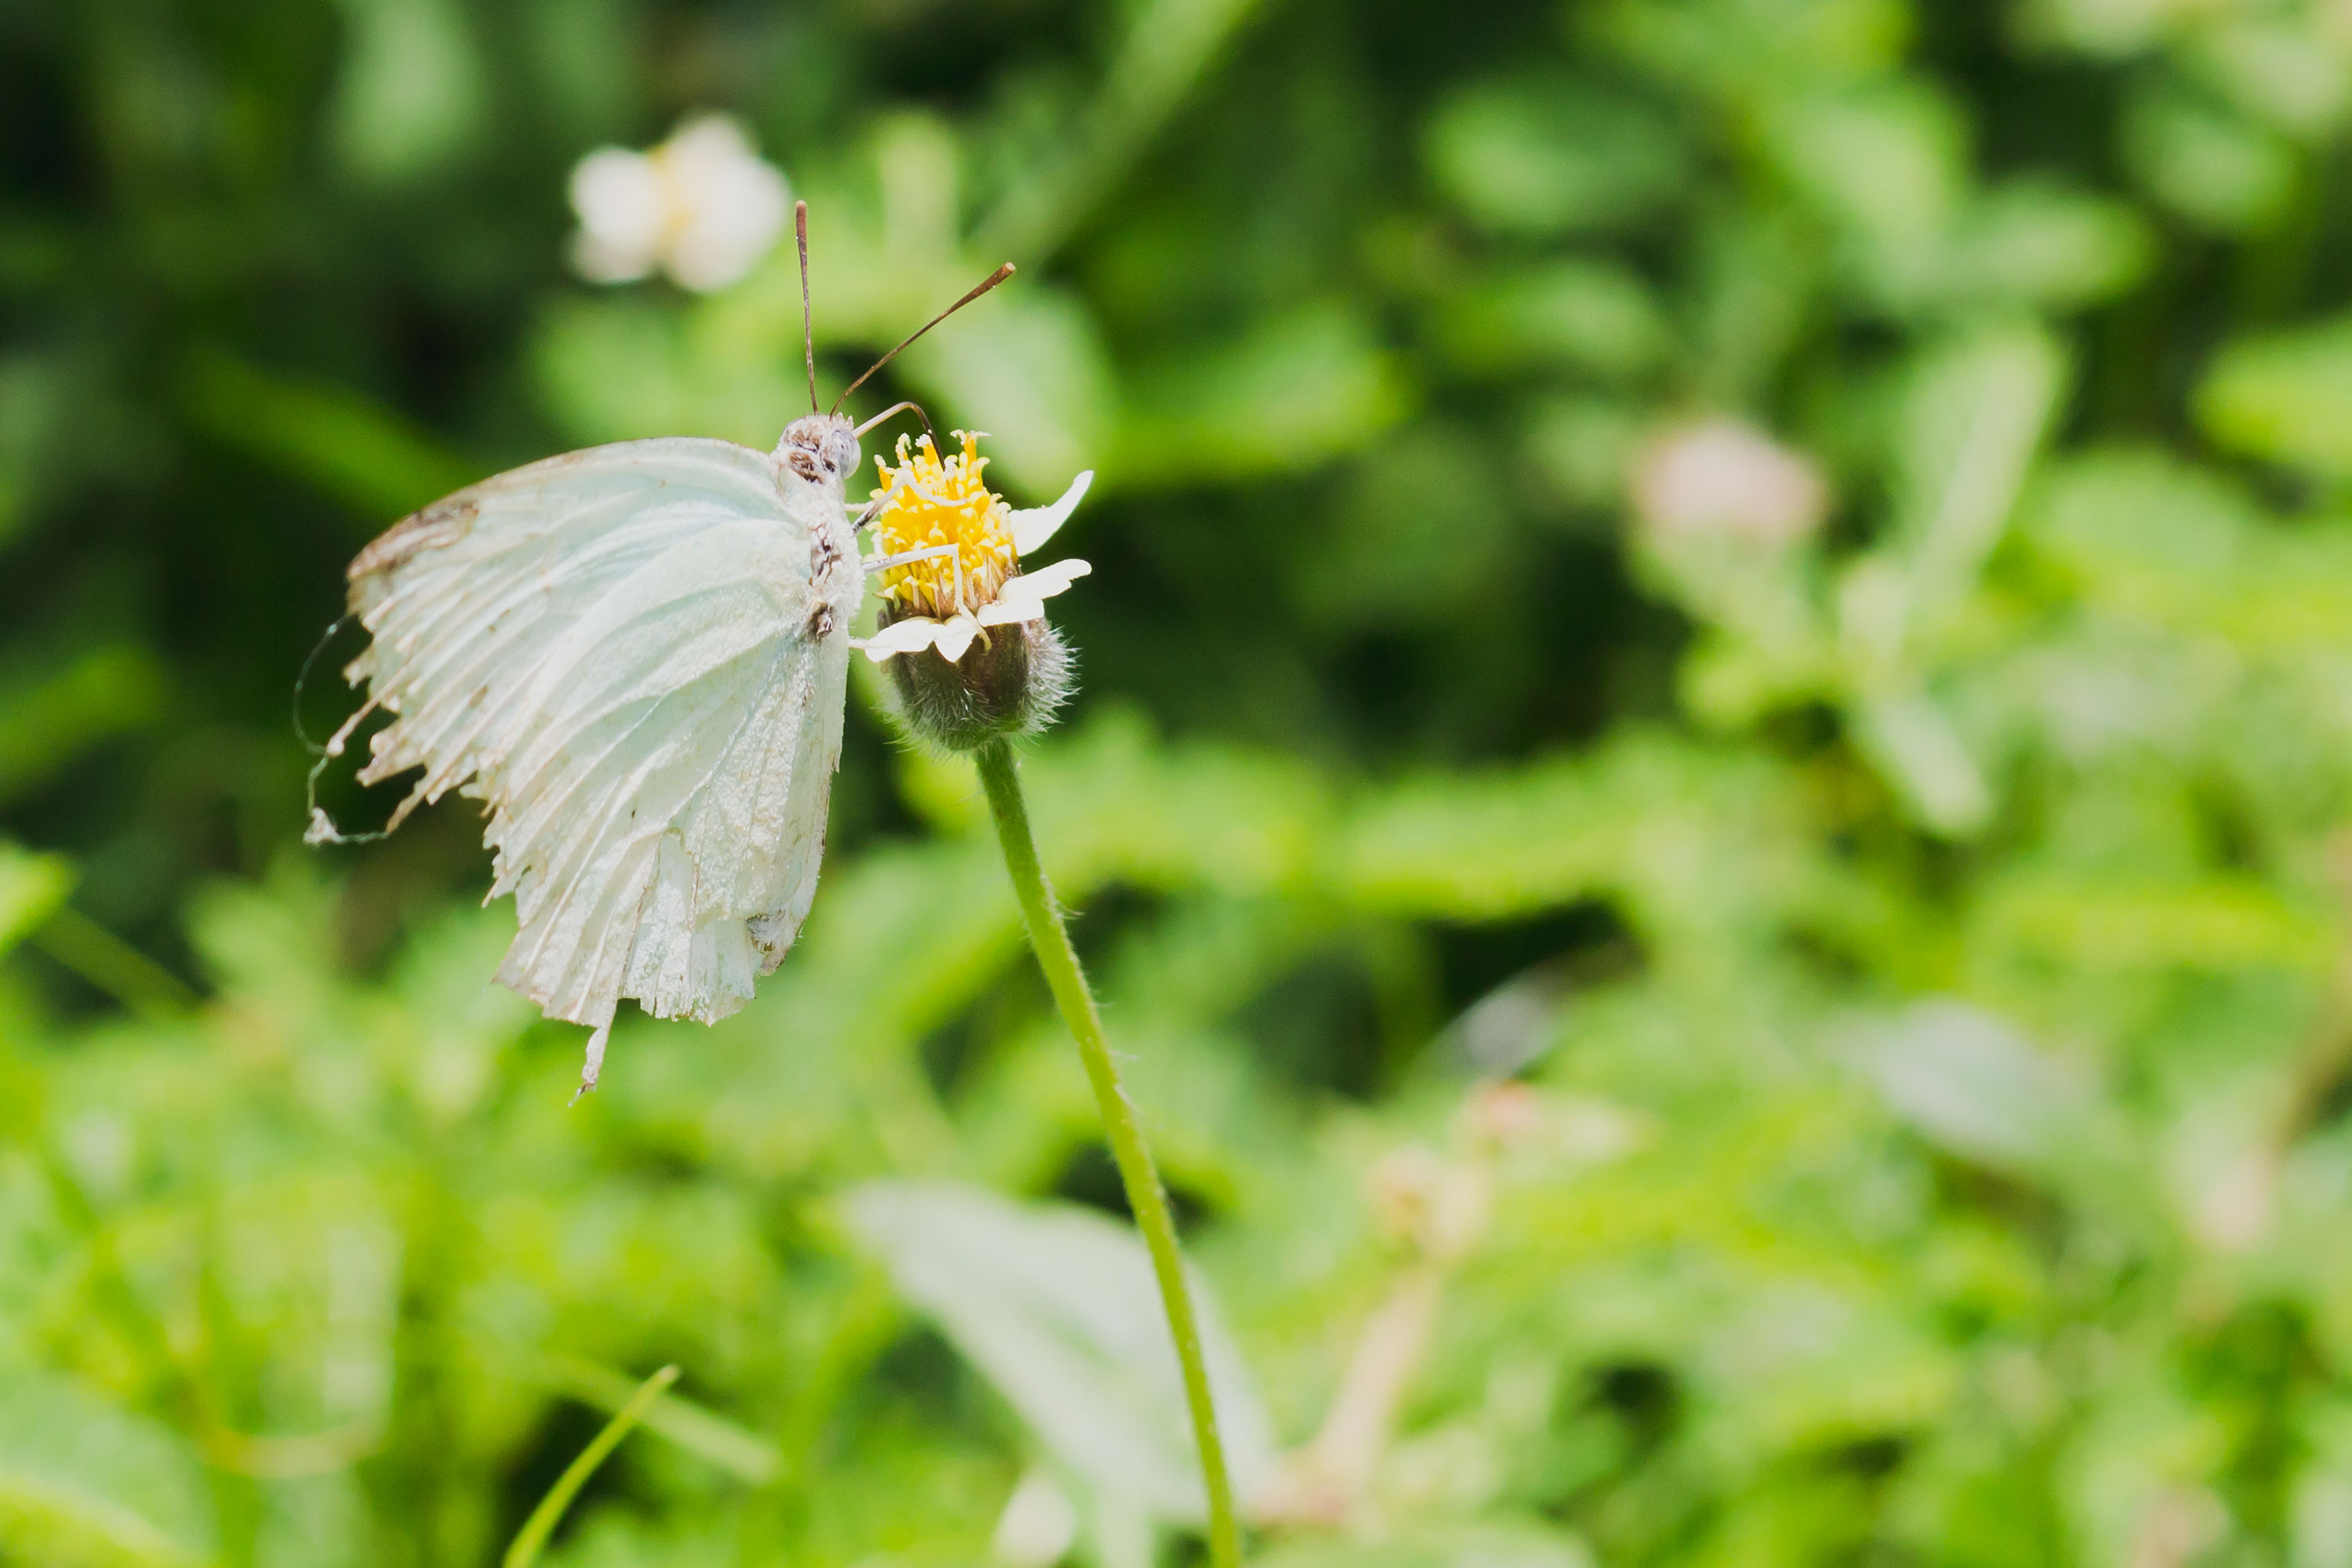 Butterfly on flower, Appealing, Wing, Sweet, Summer, HQ Photo